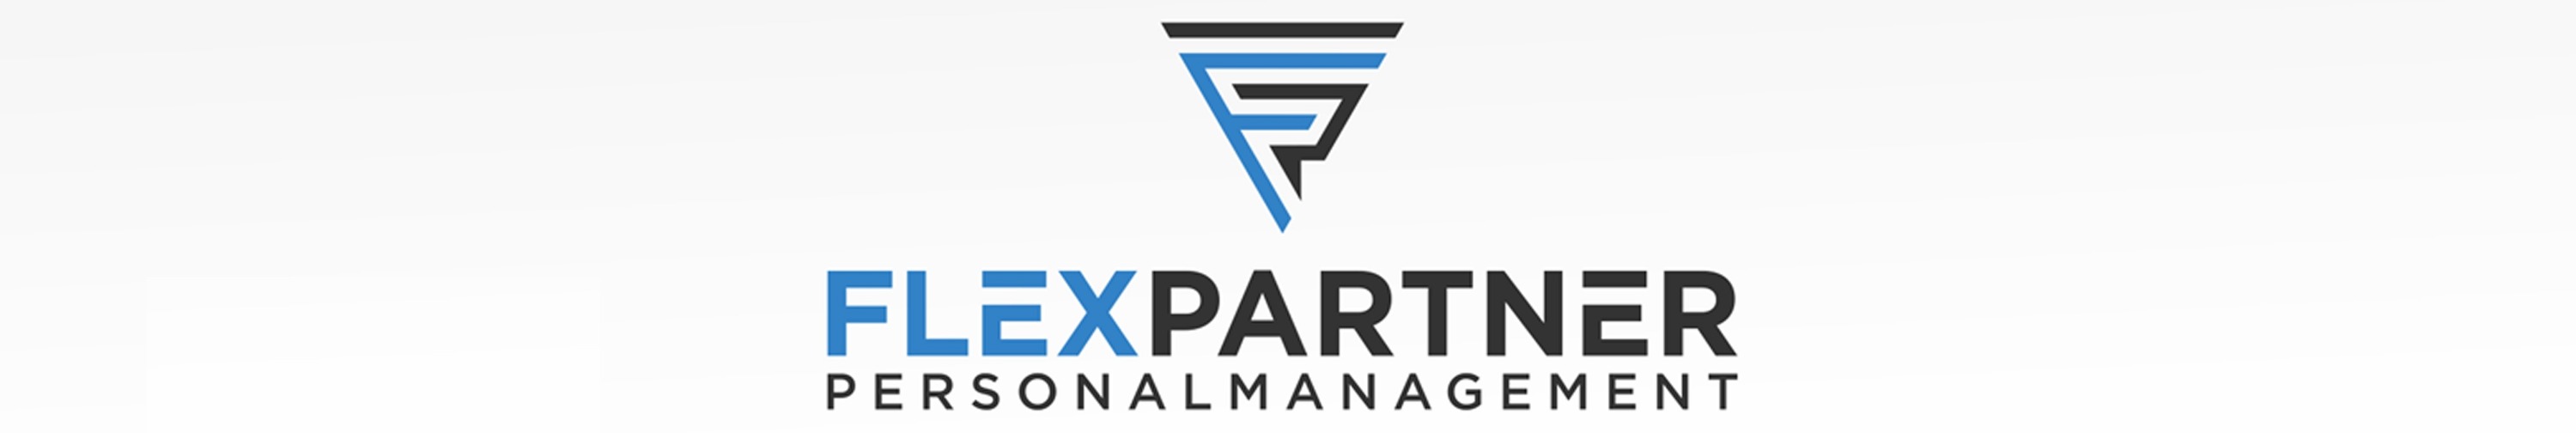 FlexPartner Personalmanagement GmbH background